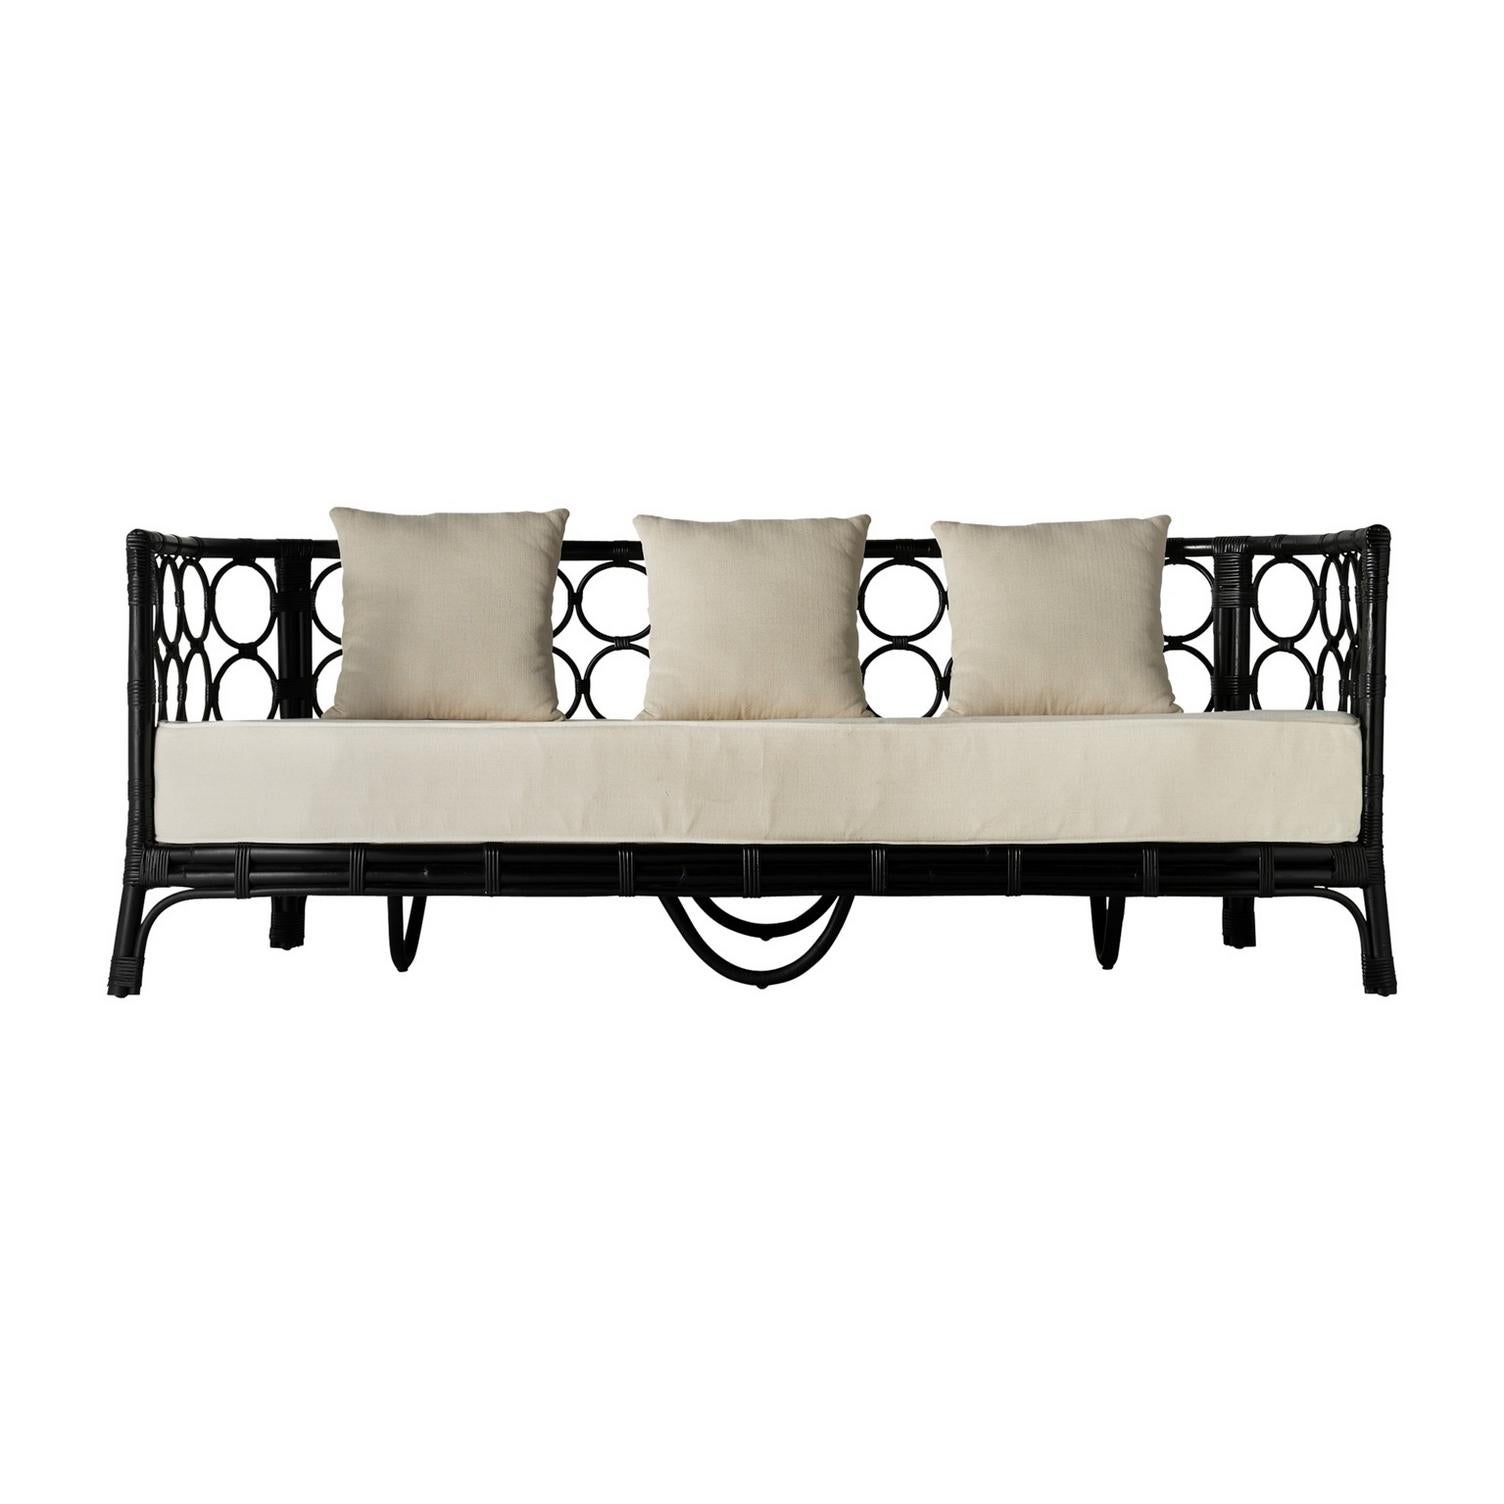 Unknown 1970s Italian Design Style Black Lacquered Rattan and Beige Linen Fabric Sofa